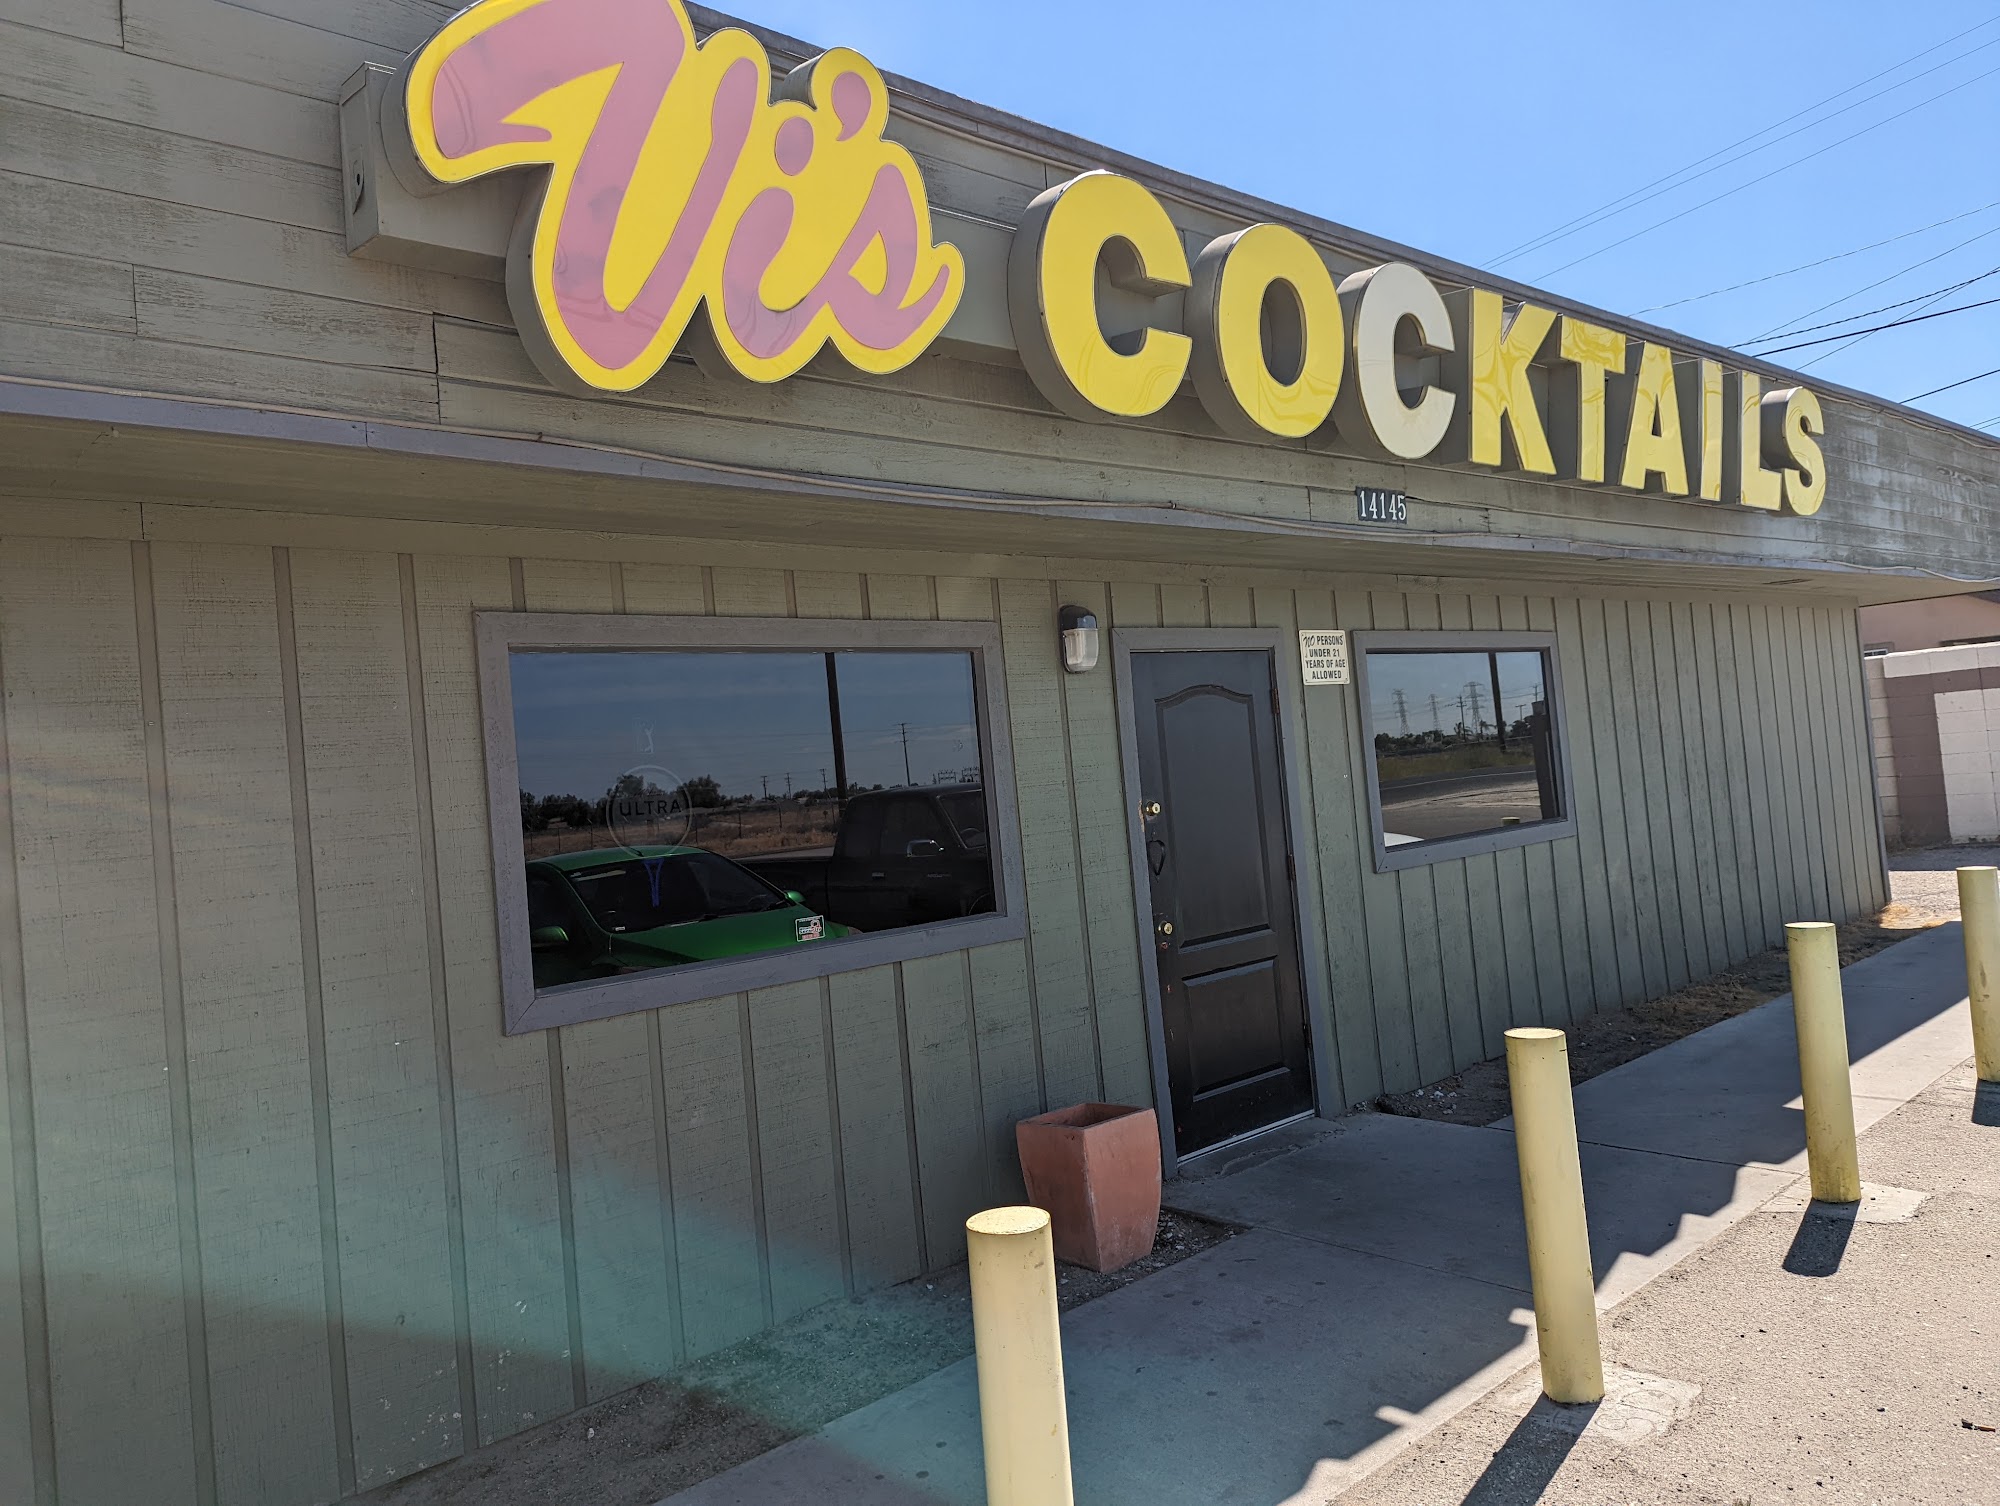 Vi's Cocktails